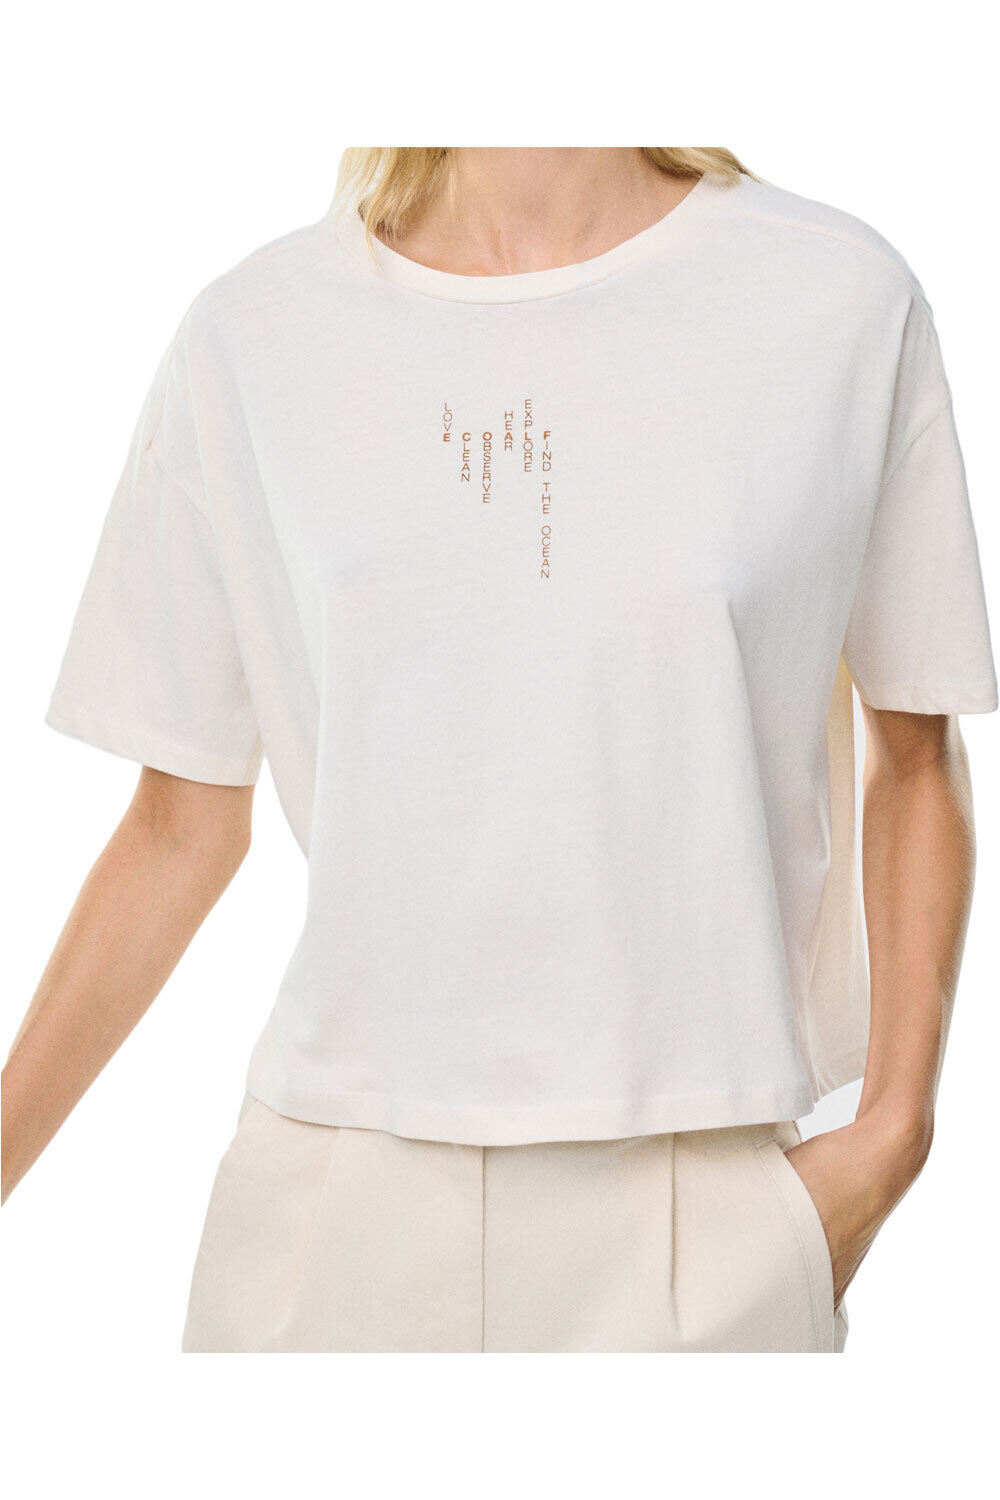 Ecoalf camiseta manga corta mujer BITTERALF T-SHIRT vista frontal